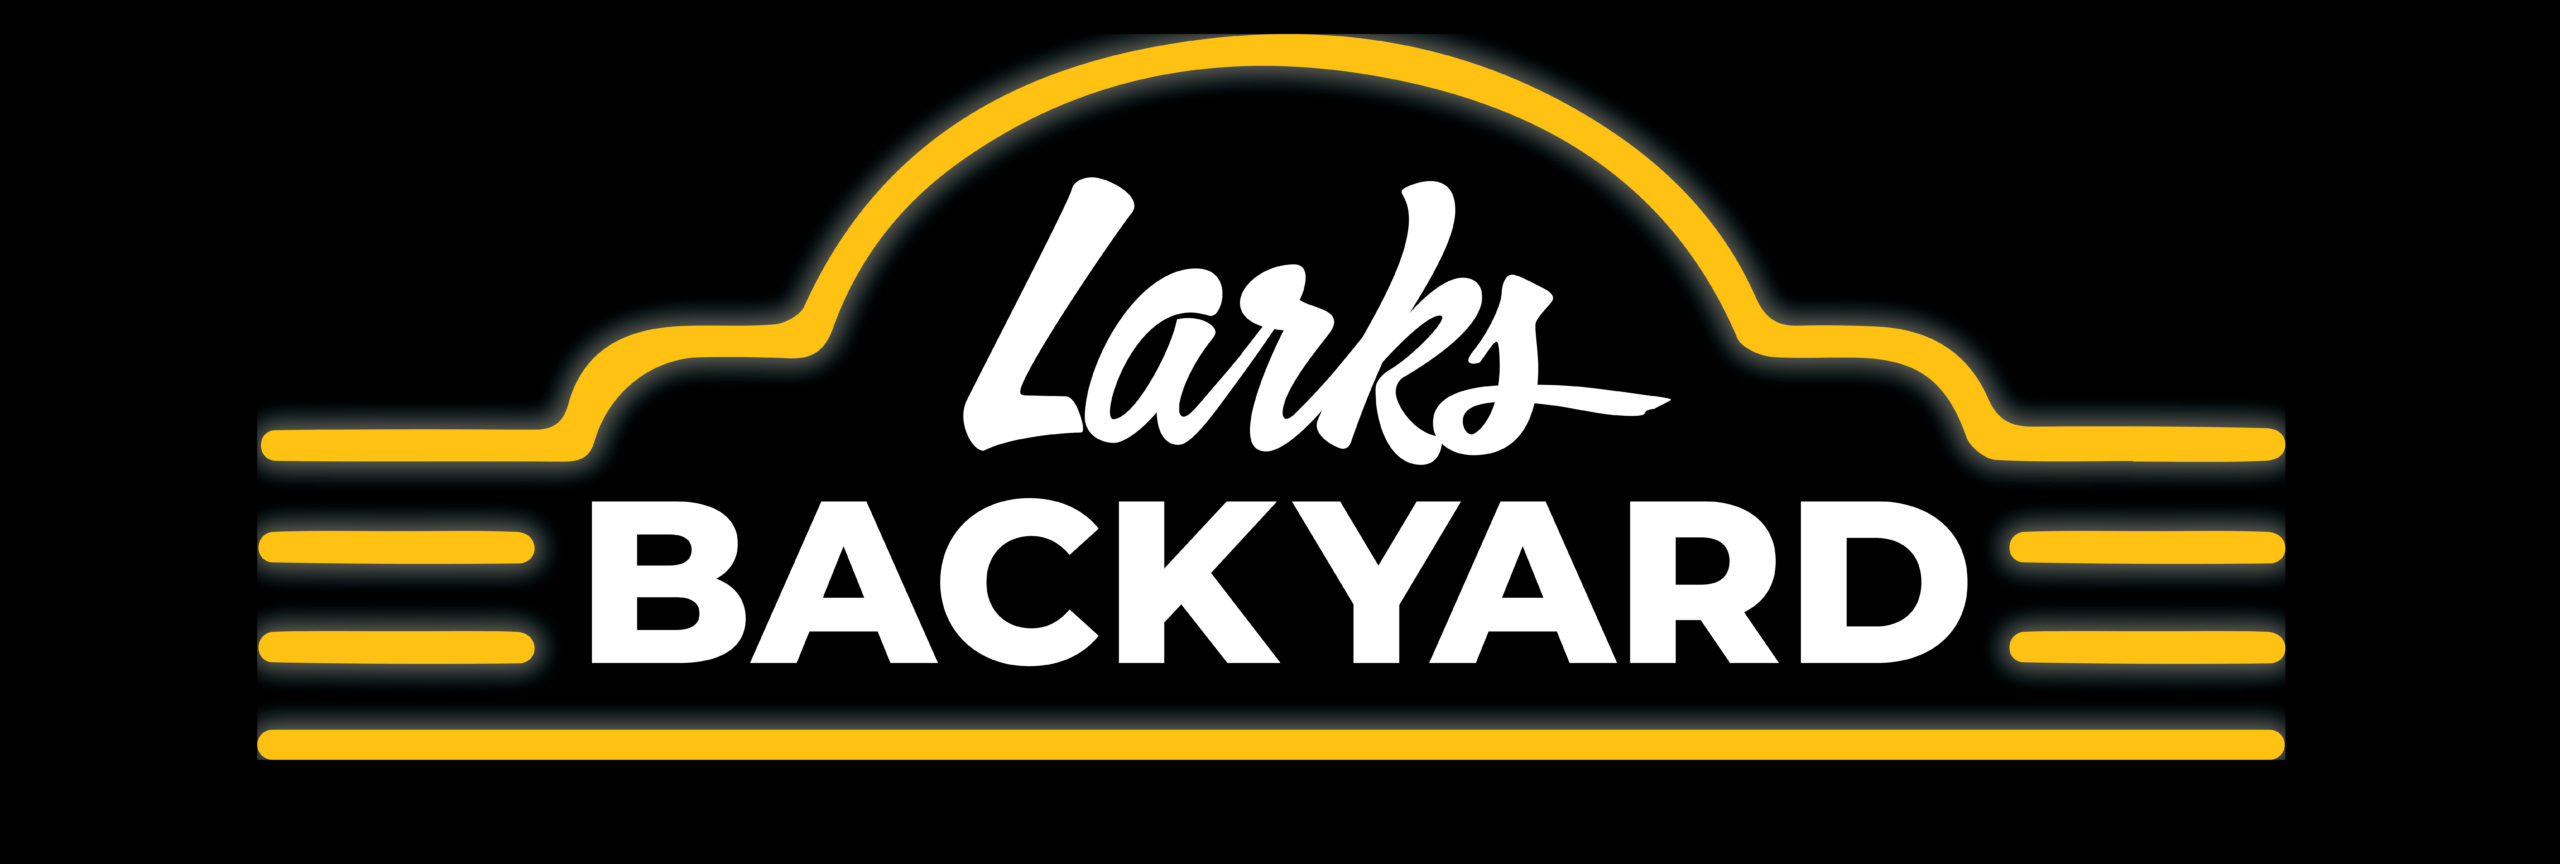 backyard logo